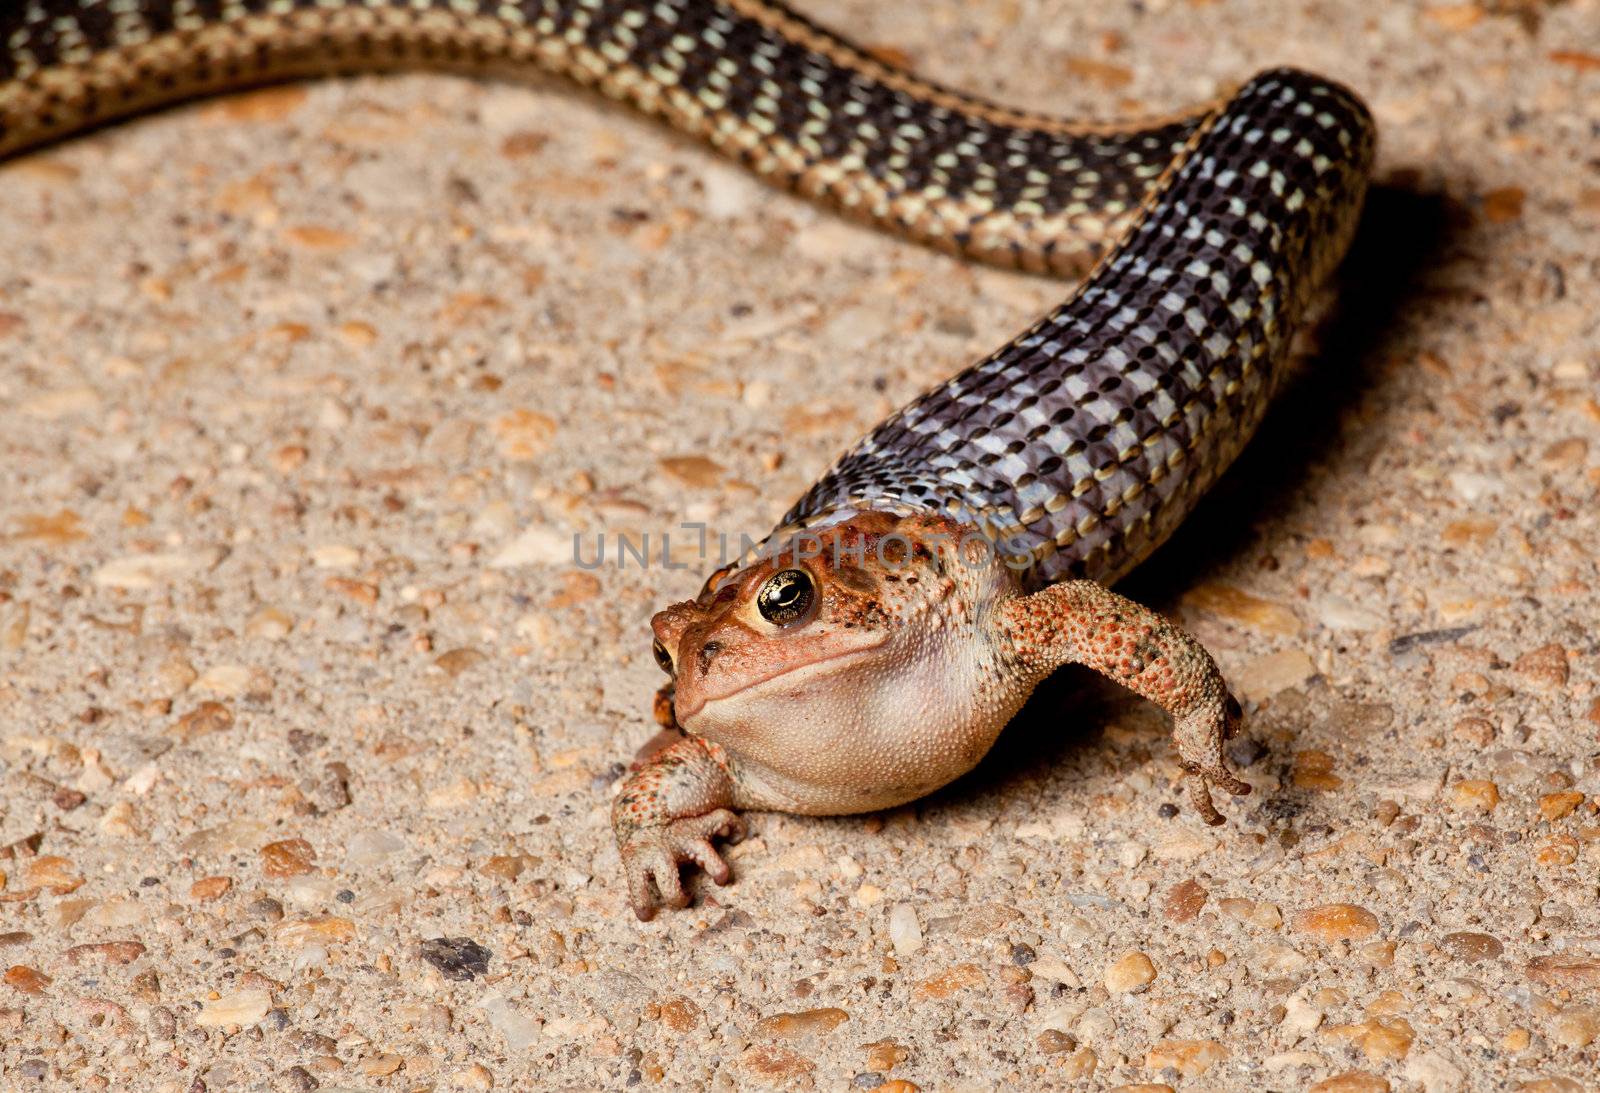 Gartner snake swallowing toad by steheap